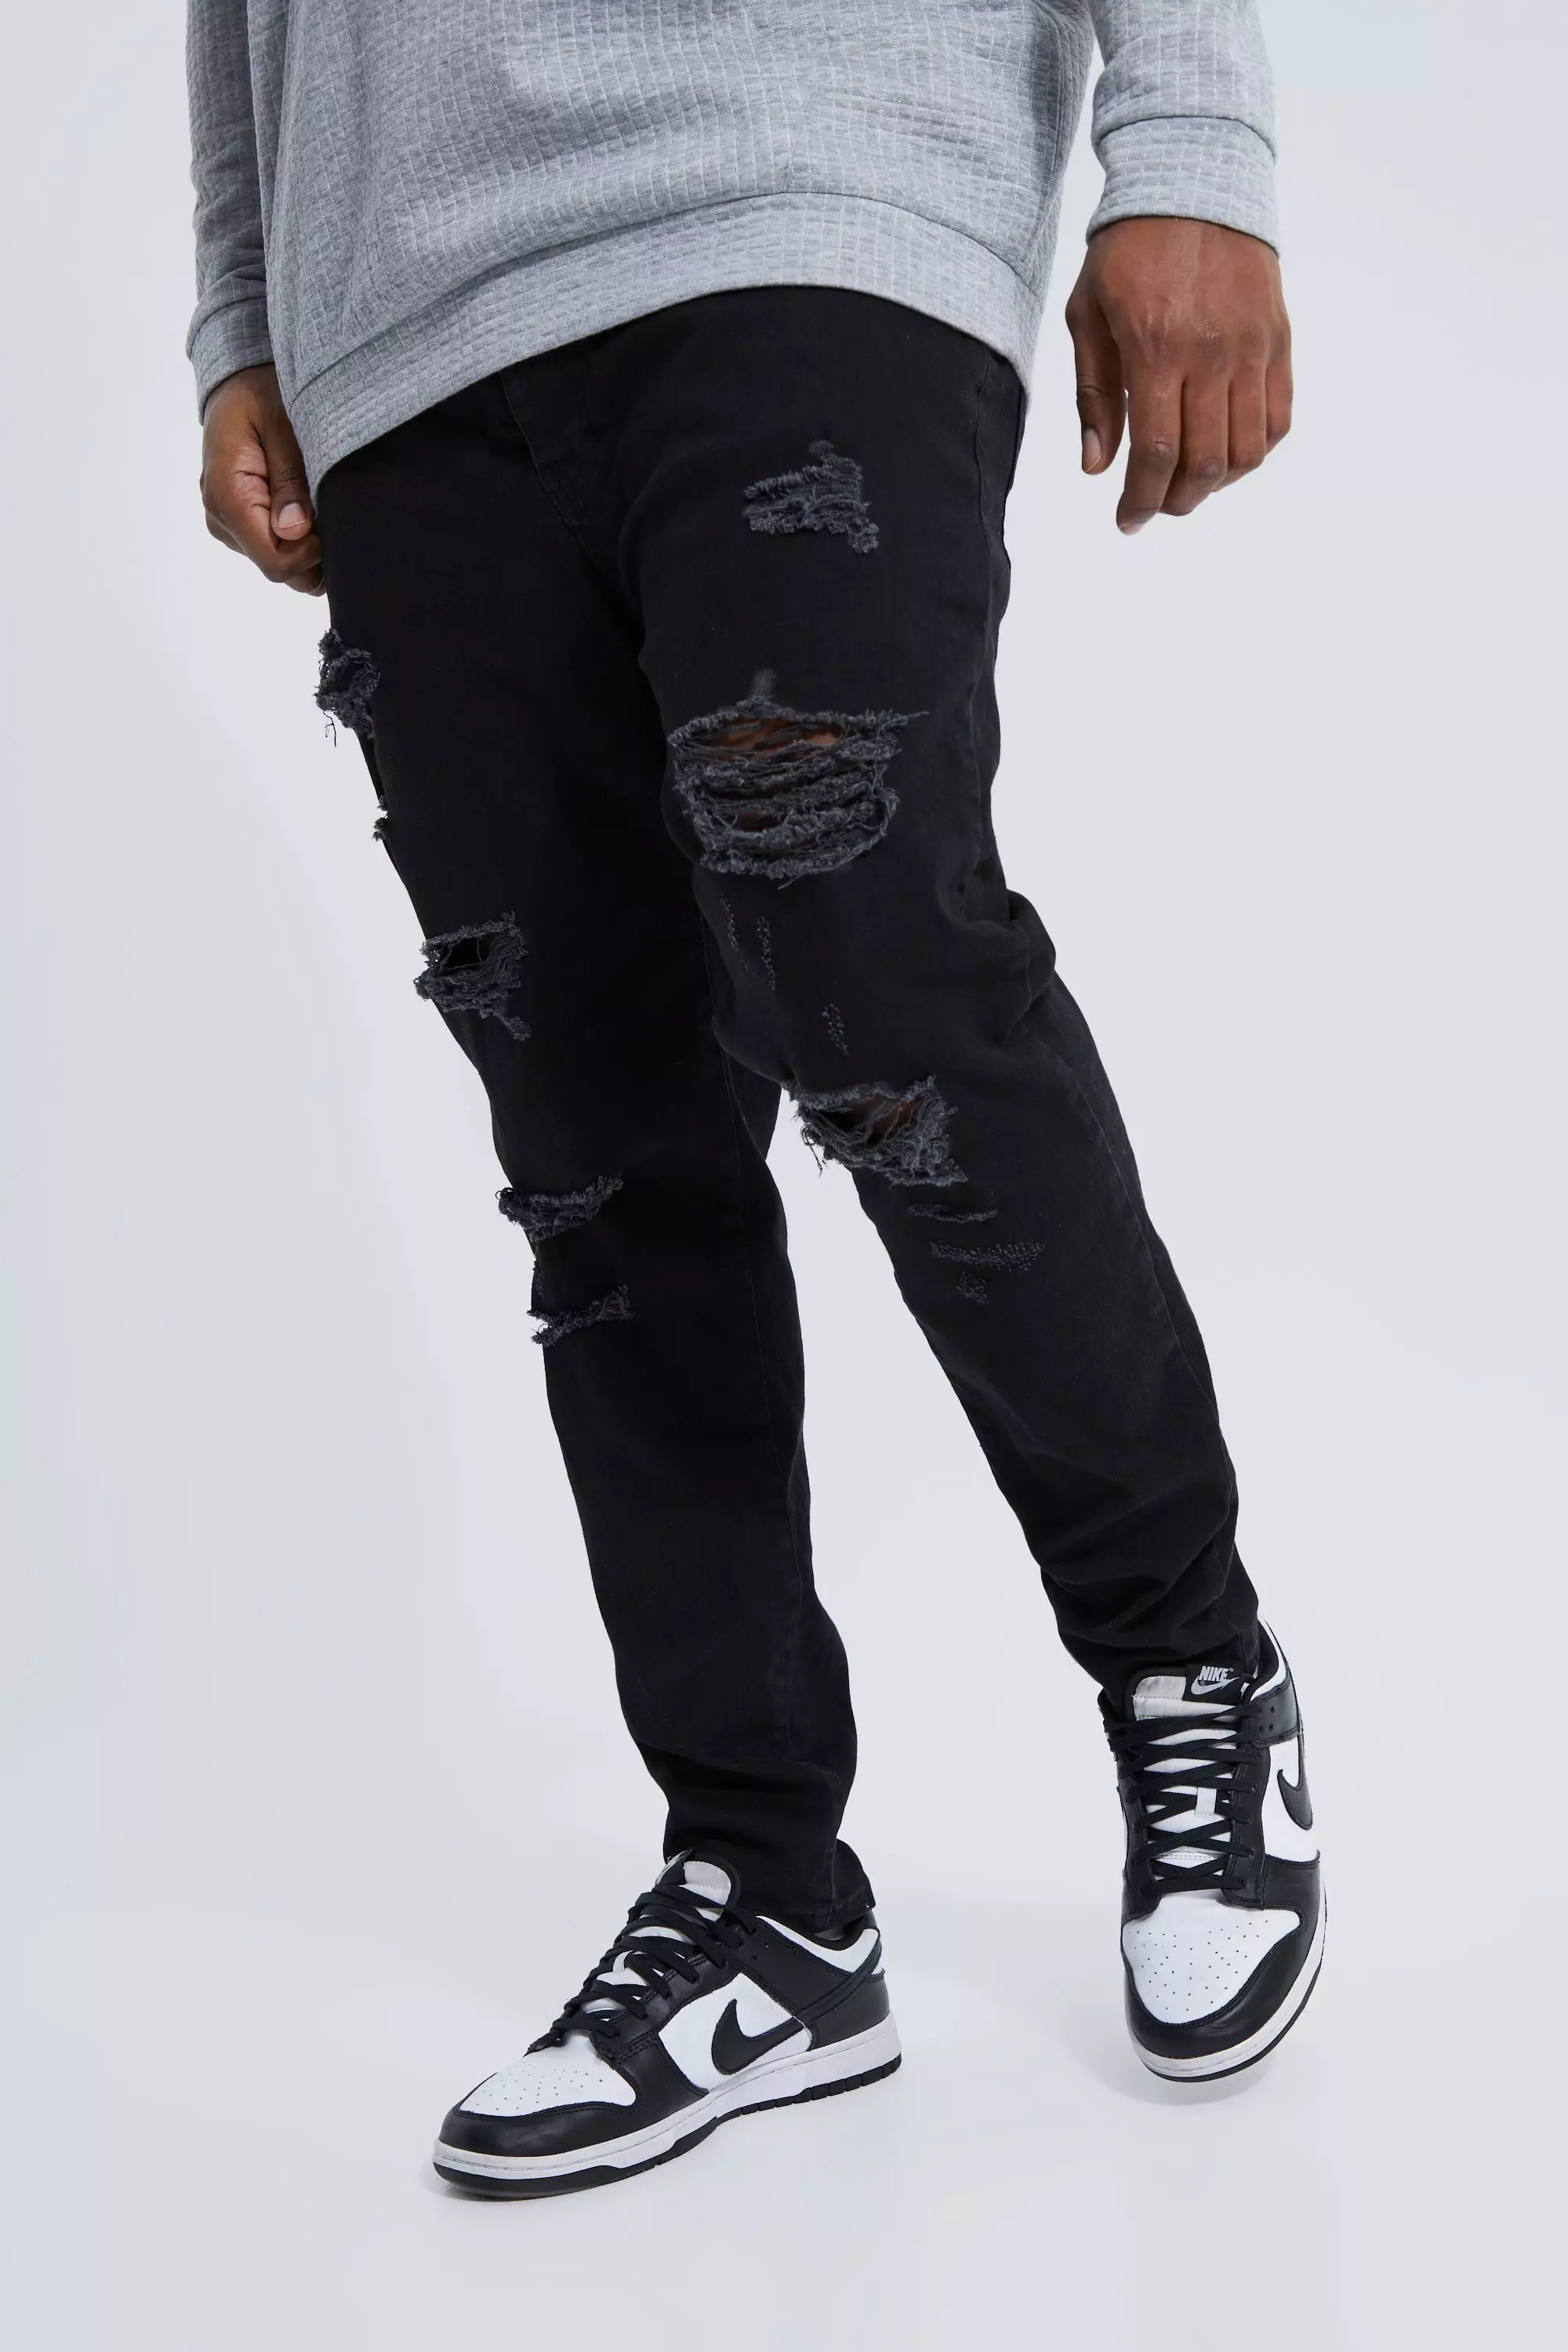 Men's Black Ripped Jeans, Black Distressed Jeans